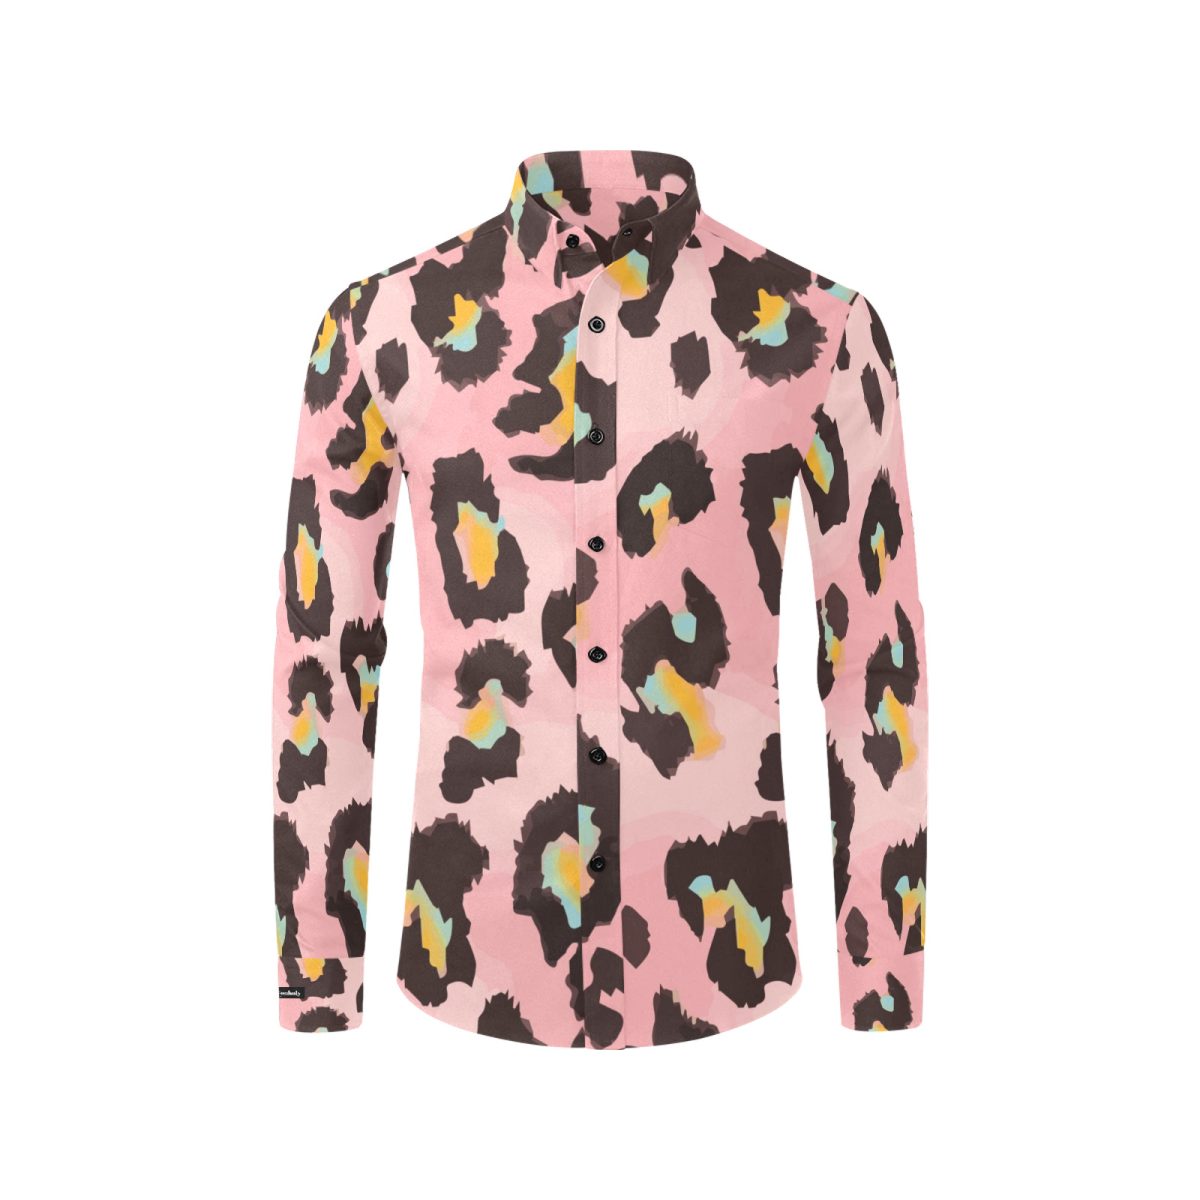 paul fredrick dress shirts | mizzen main shirts | burberry dress shirt